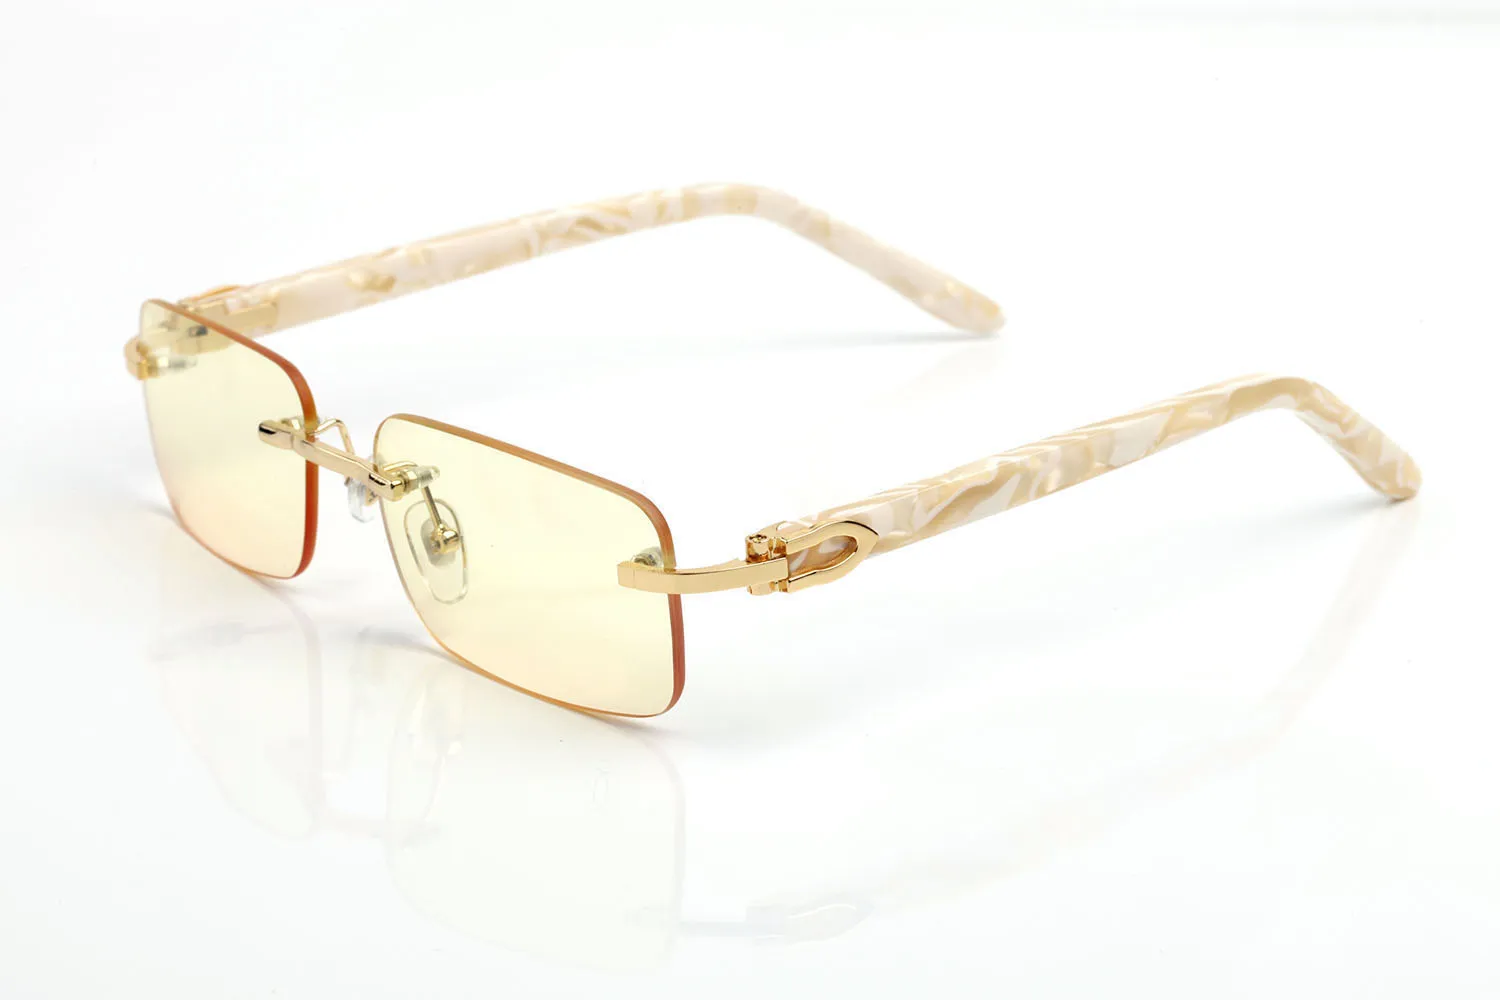 Groene Buffelhoorn Bril Designer Zonnebril voor Mannen Dames Randloze Mode Sporst Goud Metaal Witte Perzik Hart Frames Brillen L1513